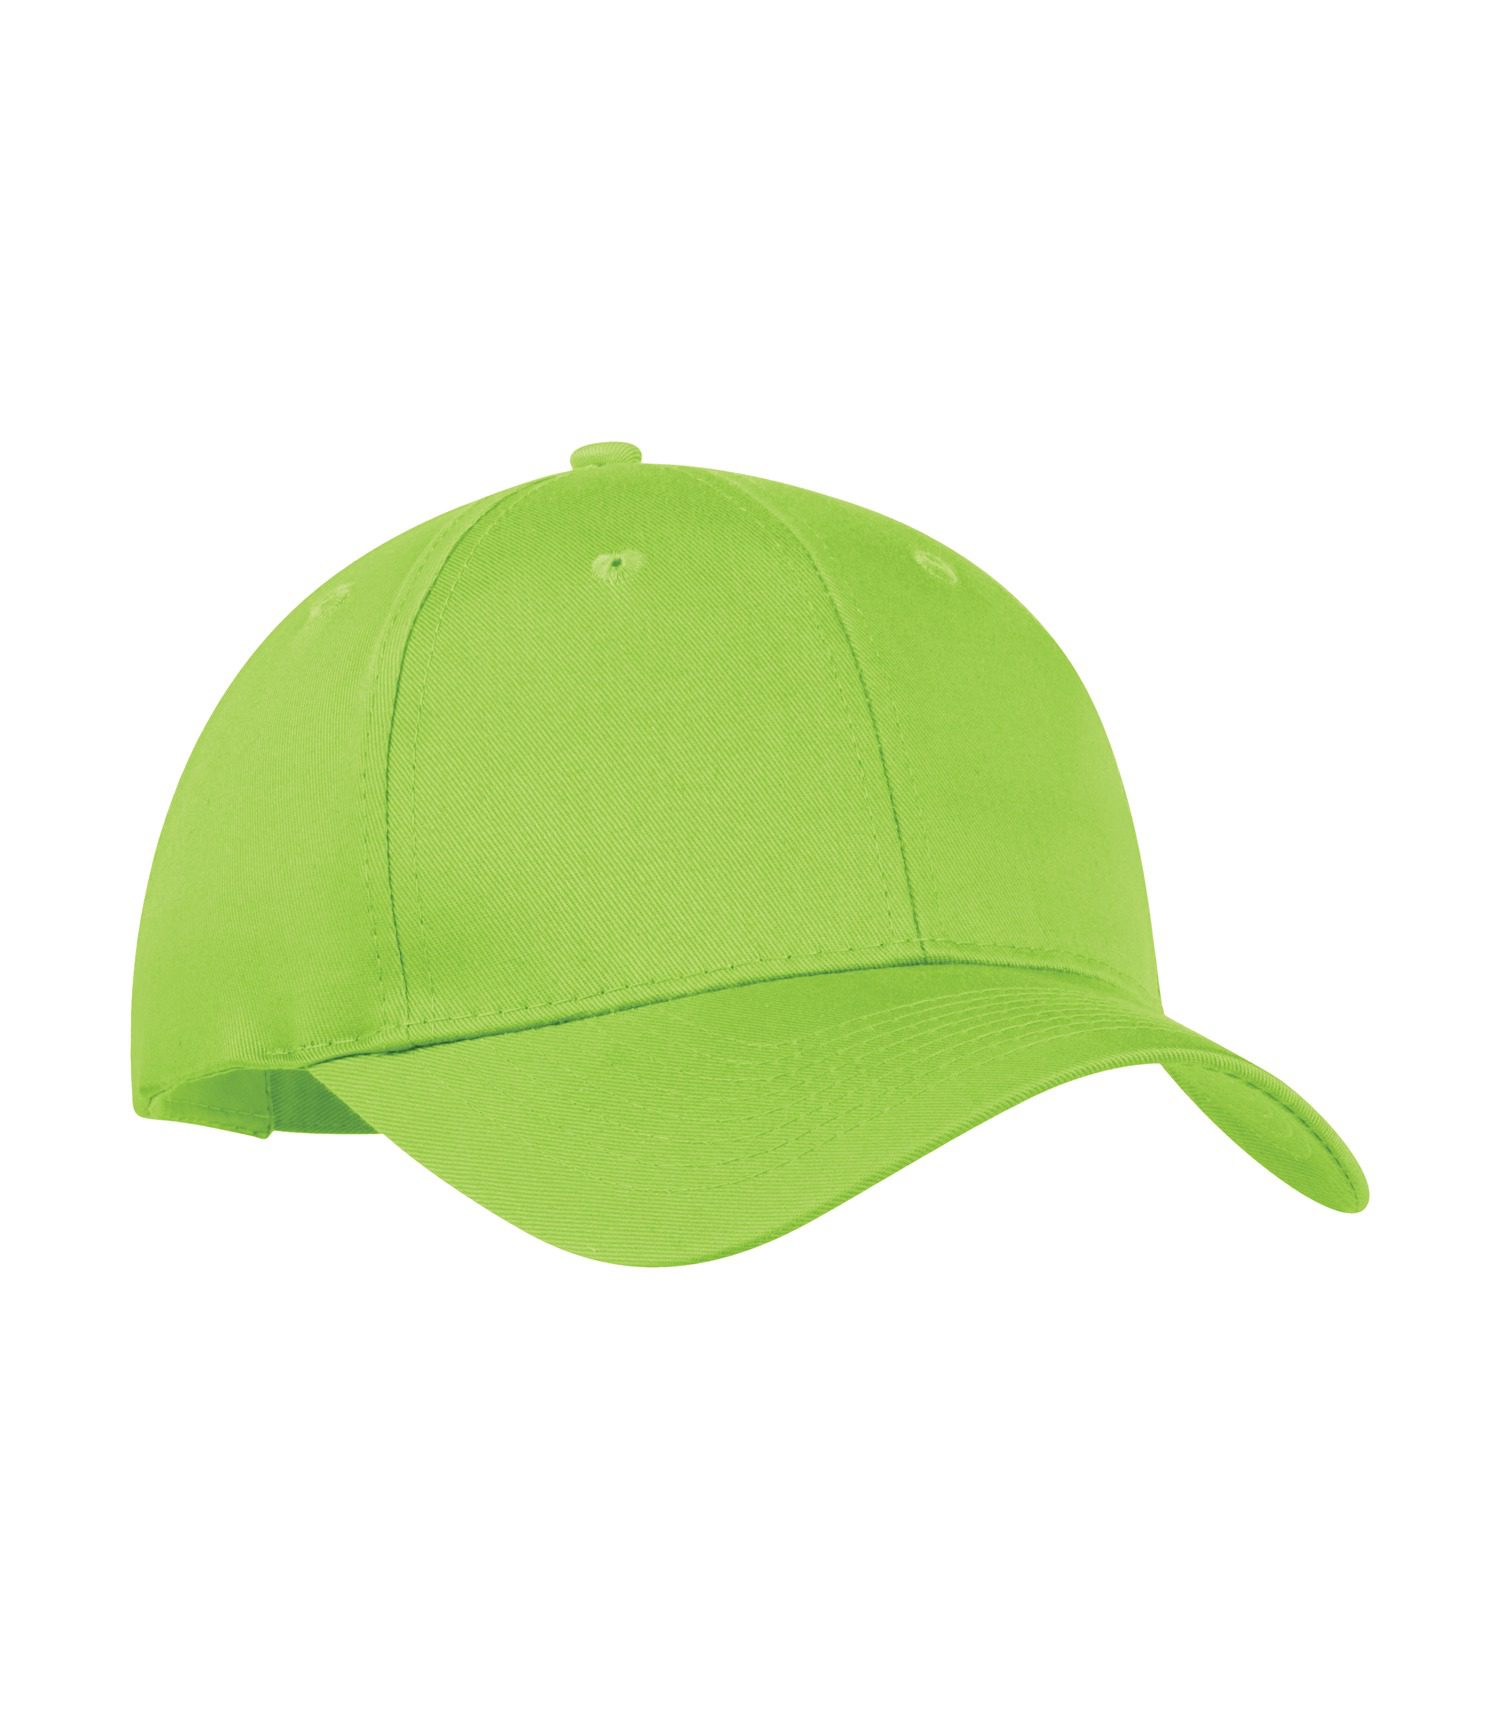 ATC™ EVERYDAY COTTON TWILL CAP #C130 Lime Shock